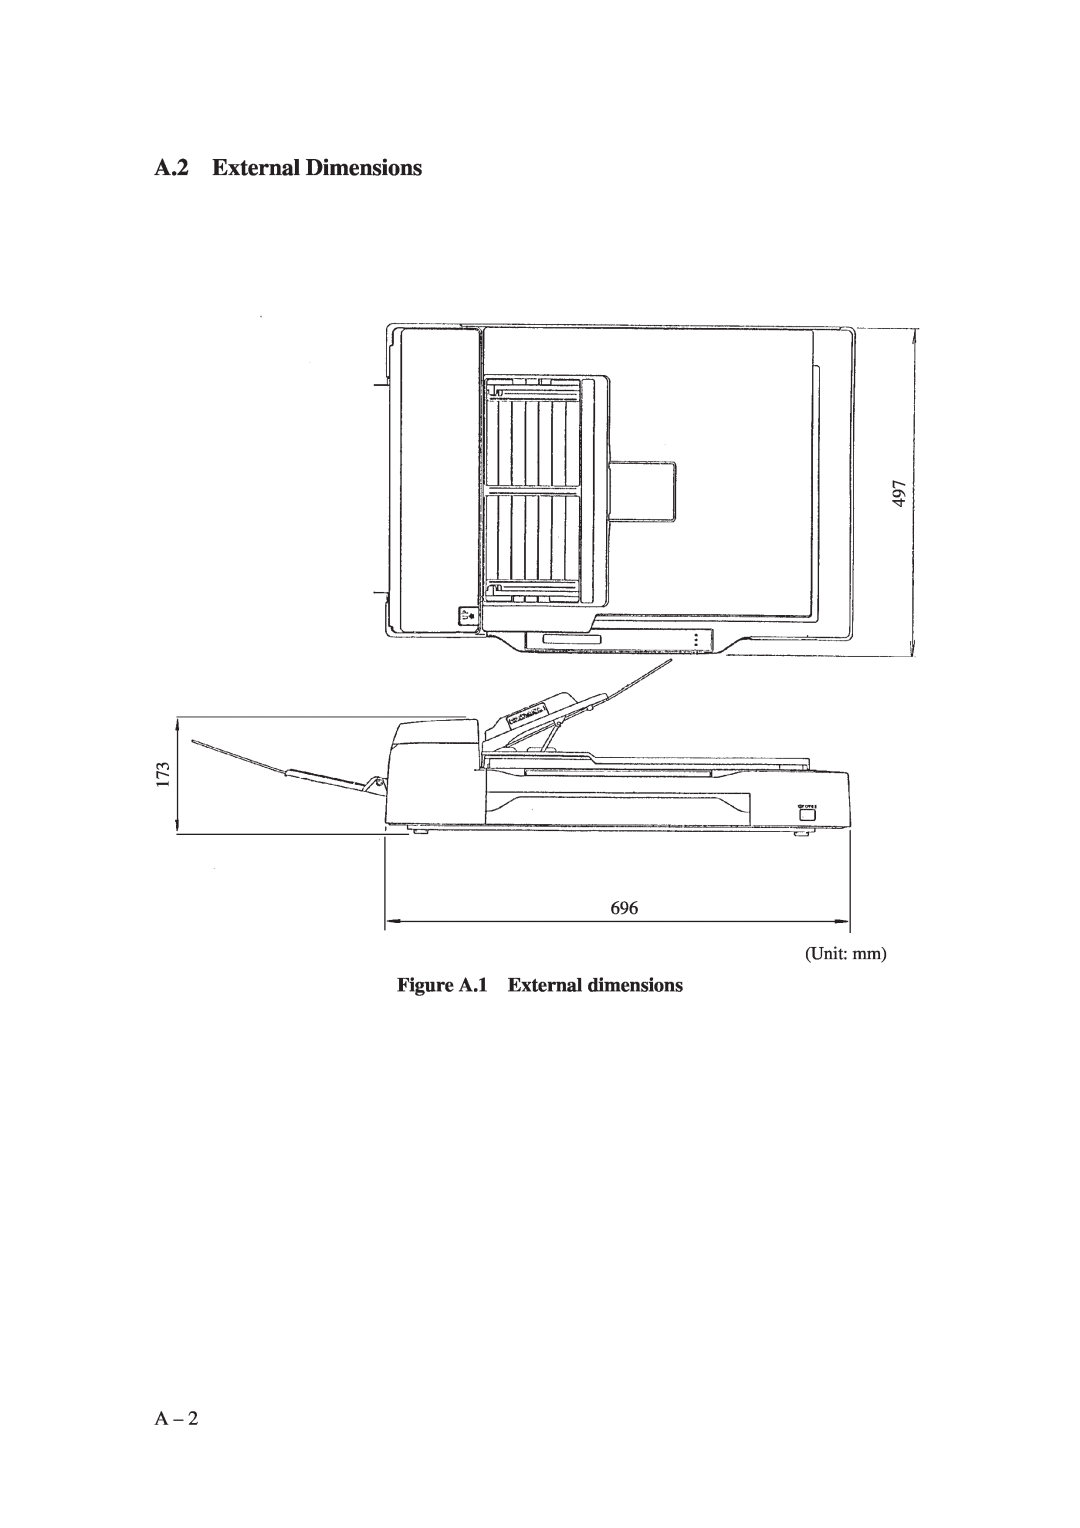 Fujitsu M3097G+, M3097E+ manual A.2 External Dimensions, Figure A.1 External dimensions, 497 173 696 Unit mm 